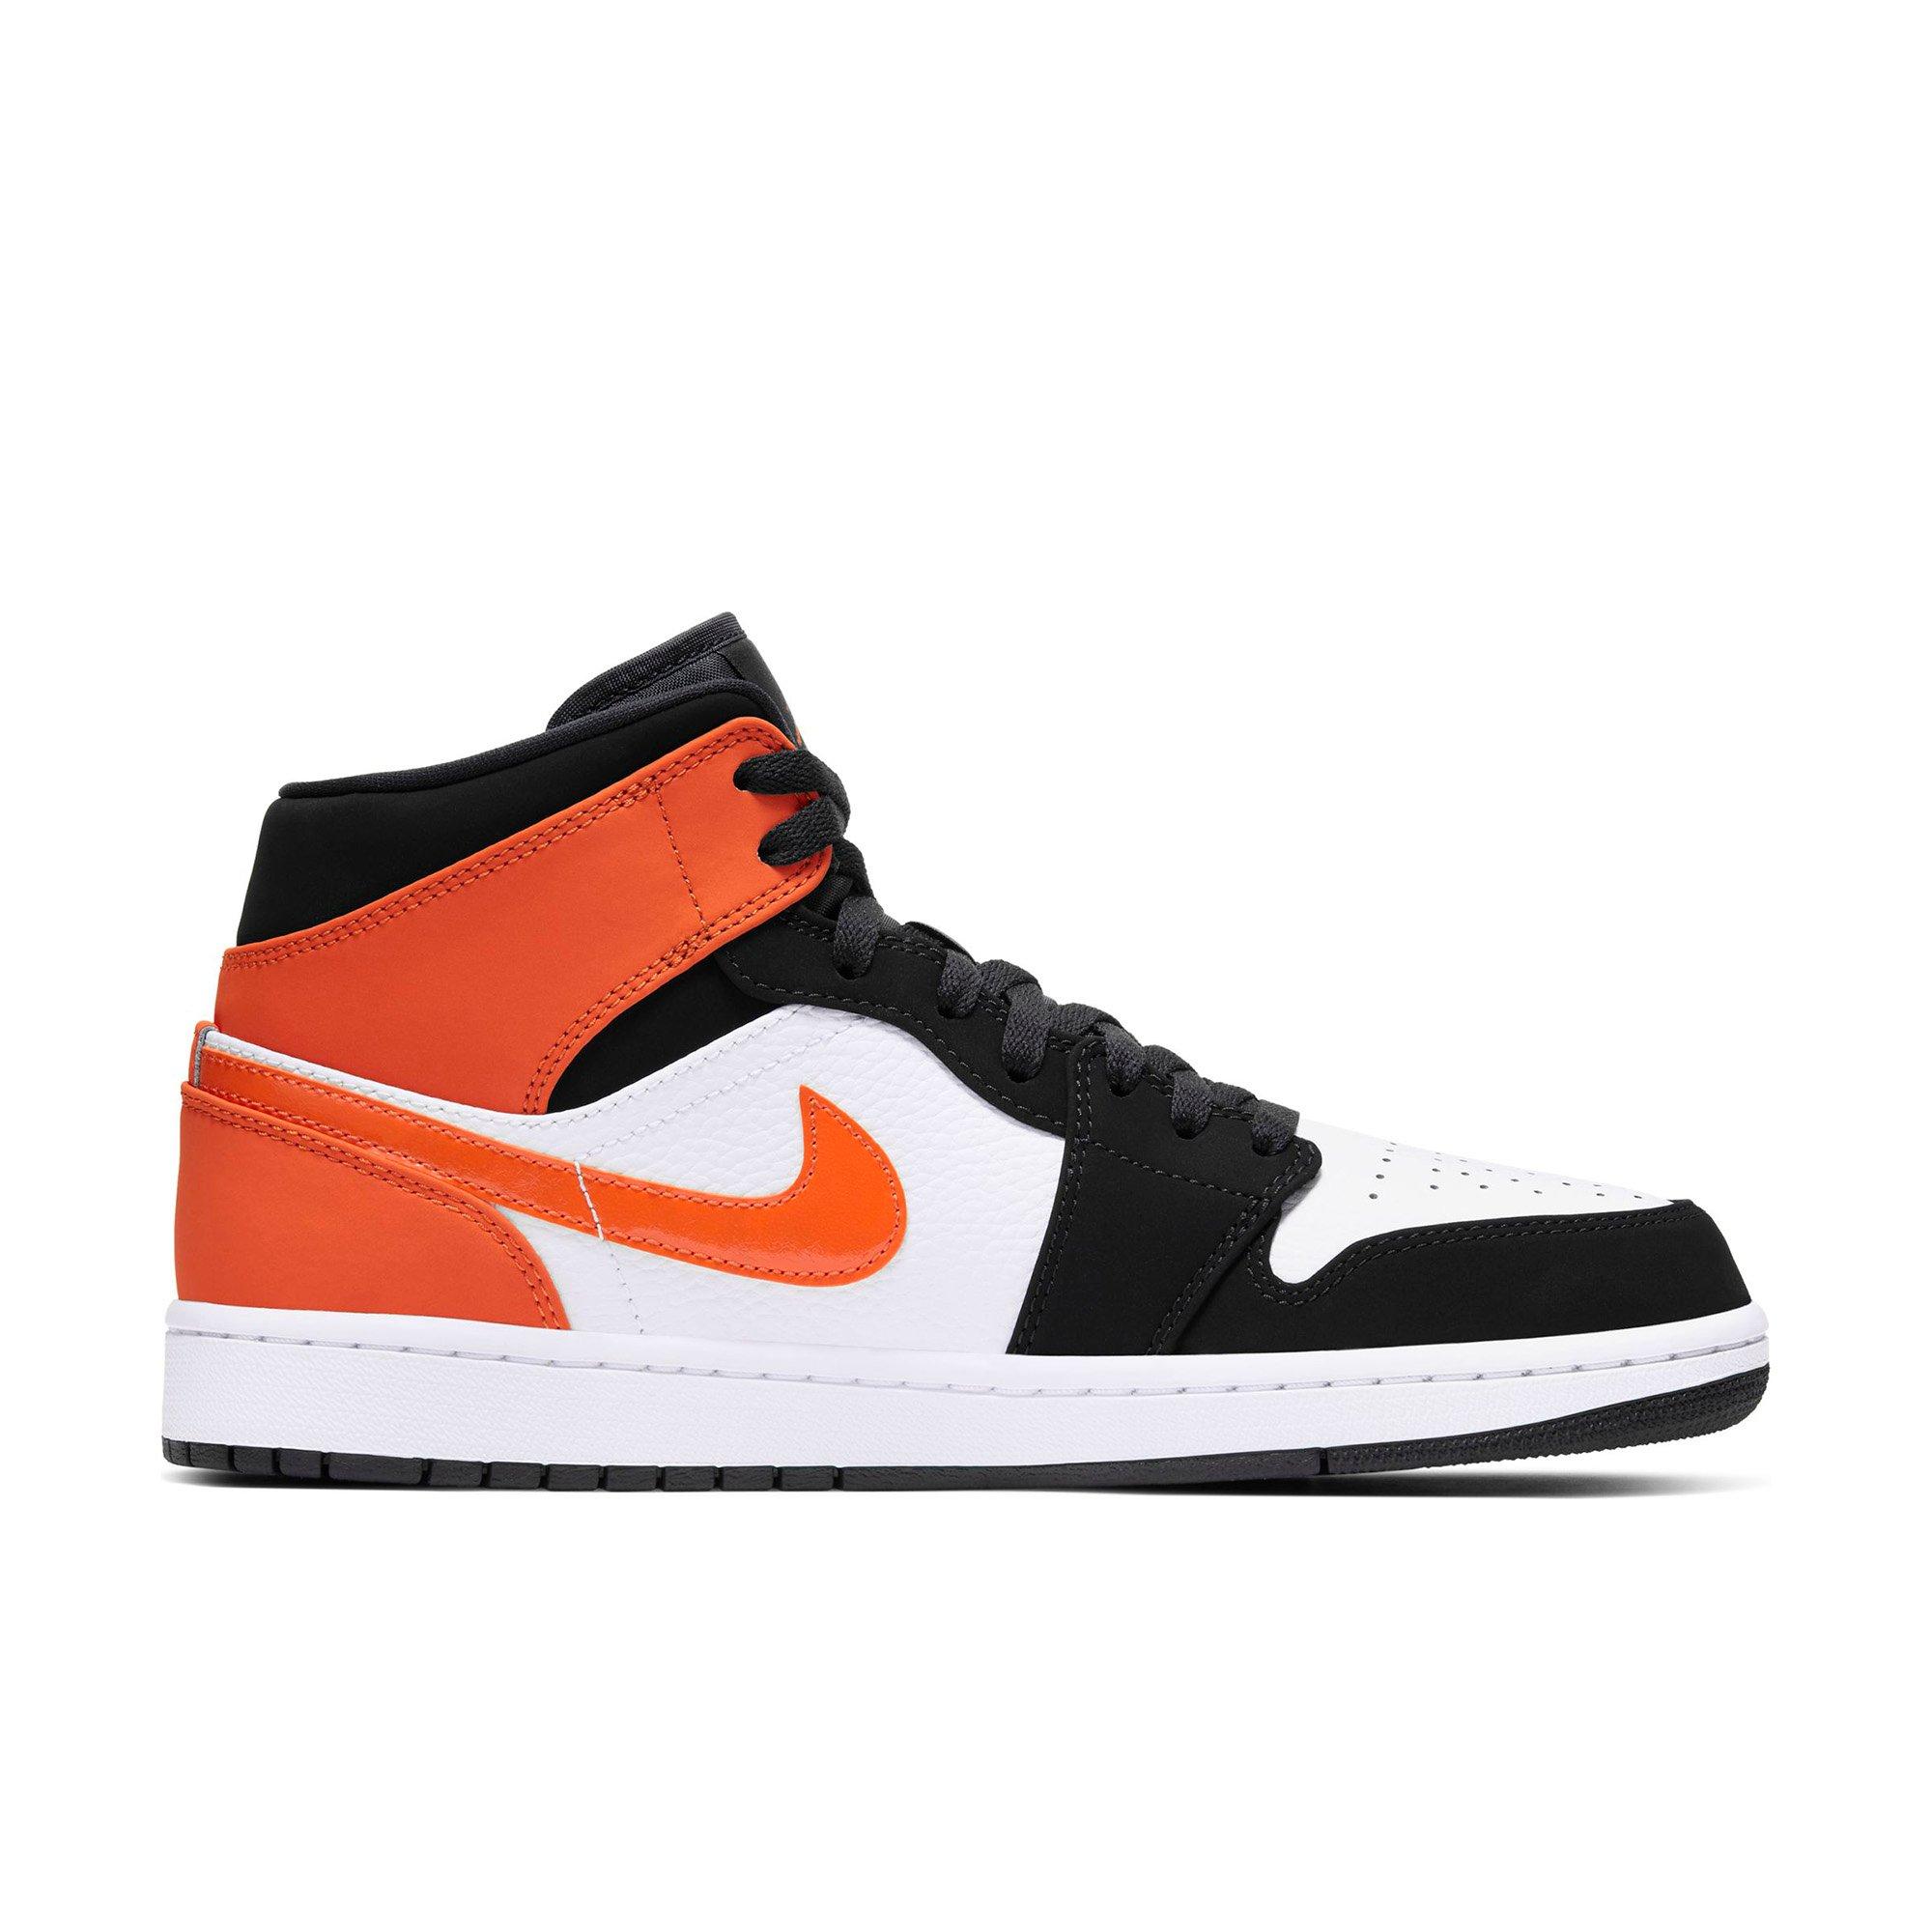 jordan shoes orange and black